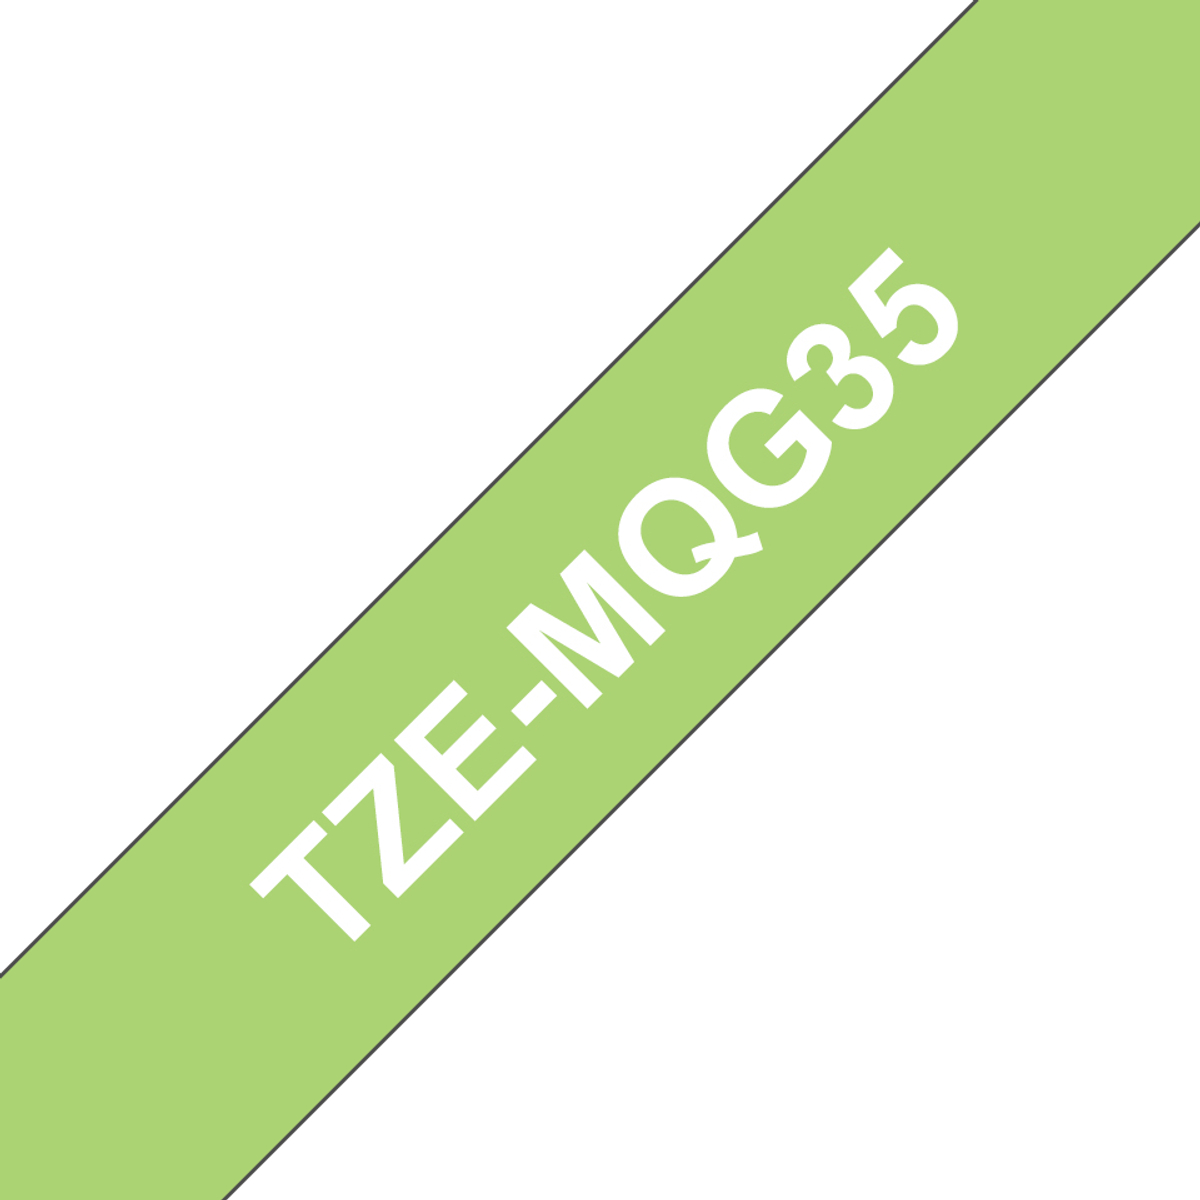 TZEMQG35 12mm White On Lime Label Tape